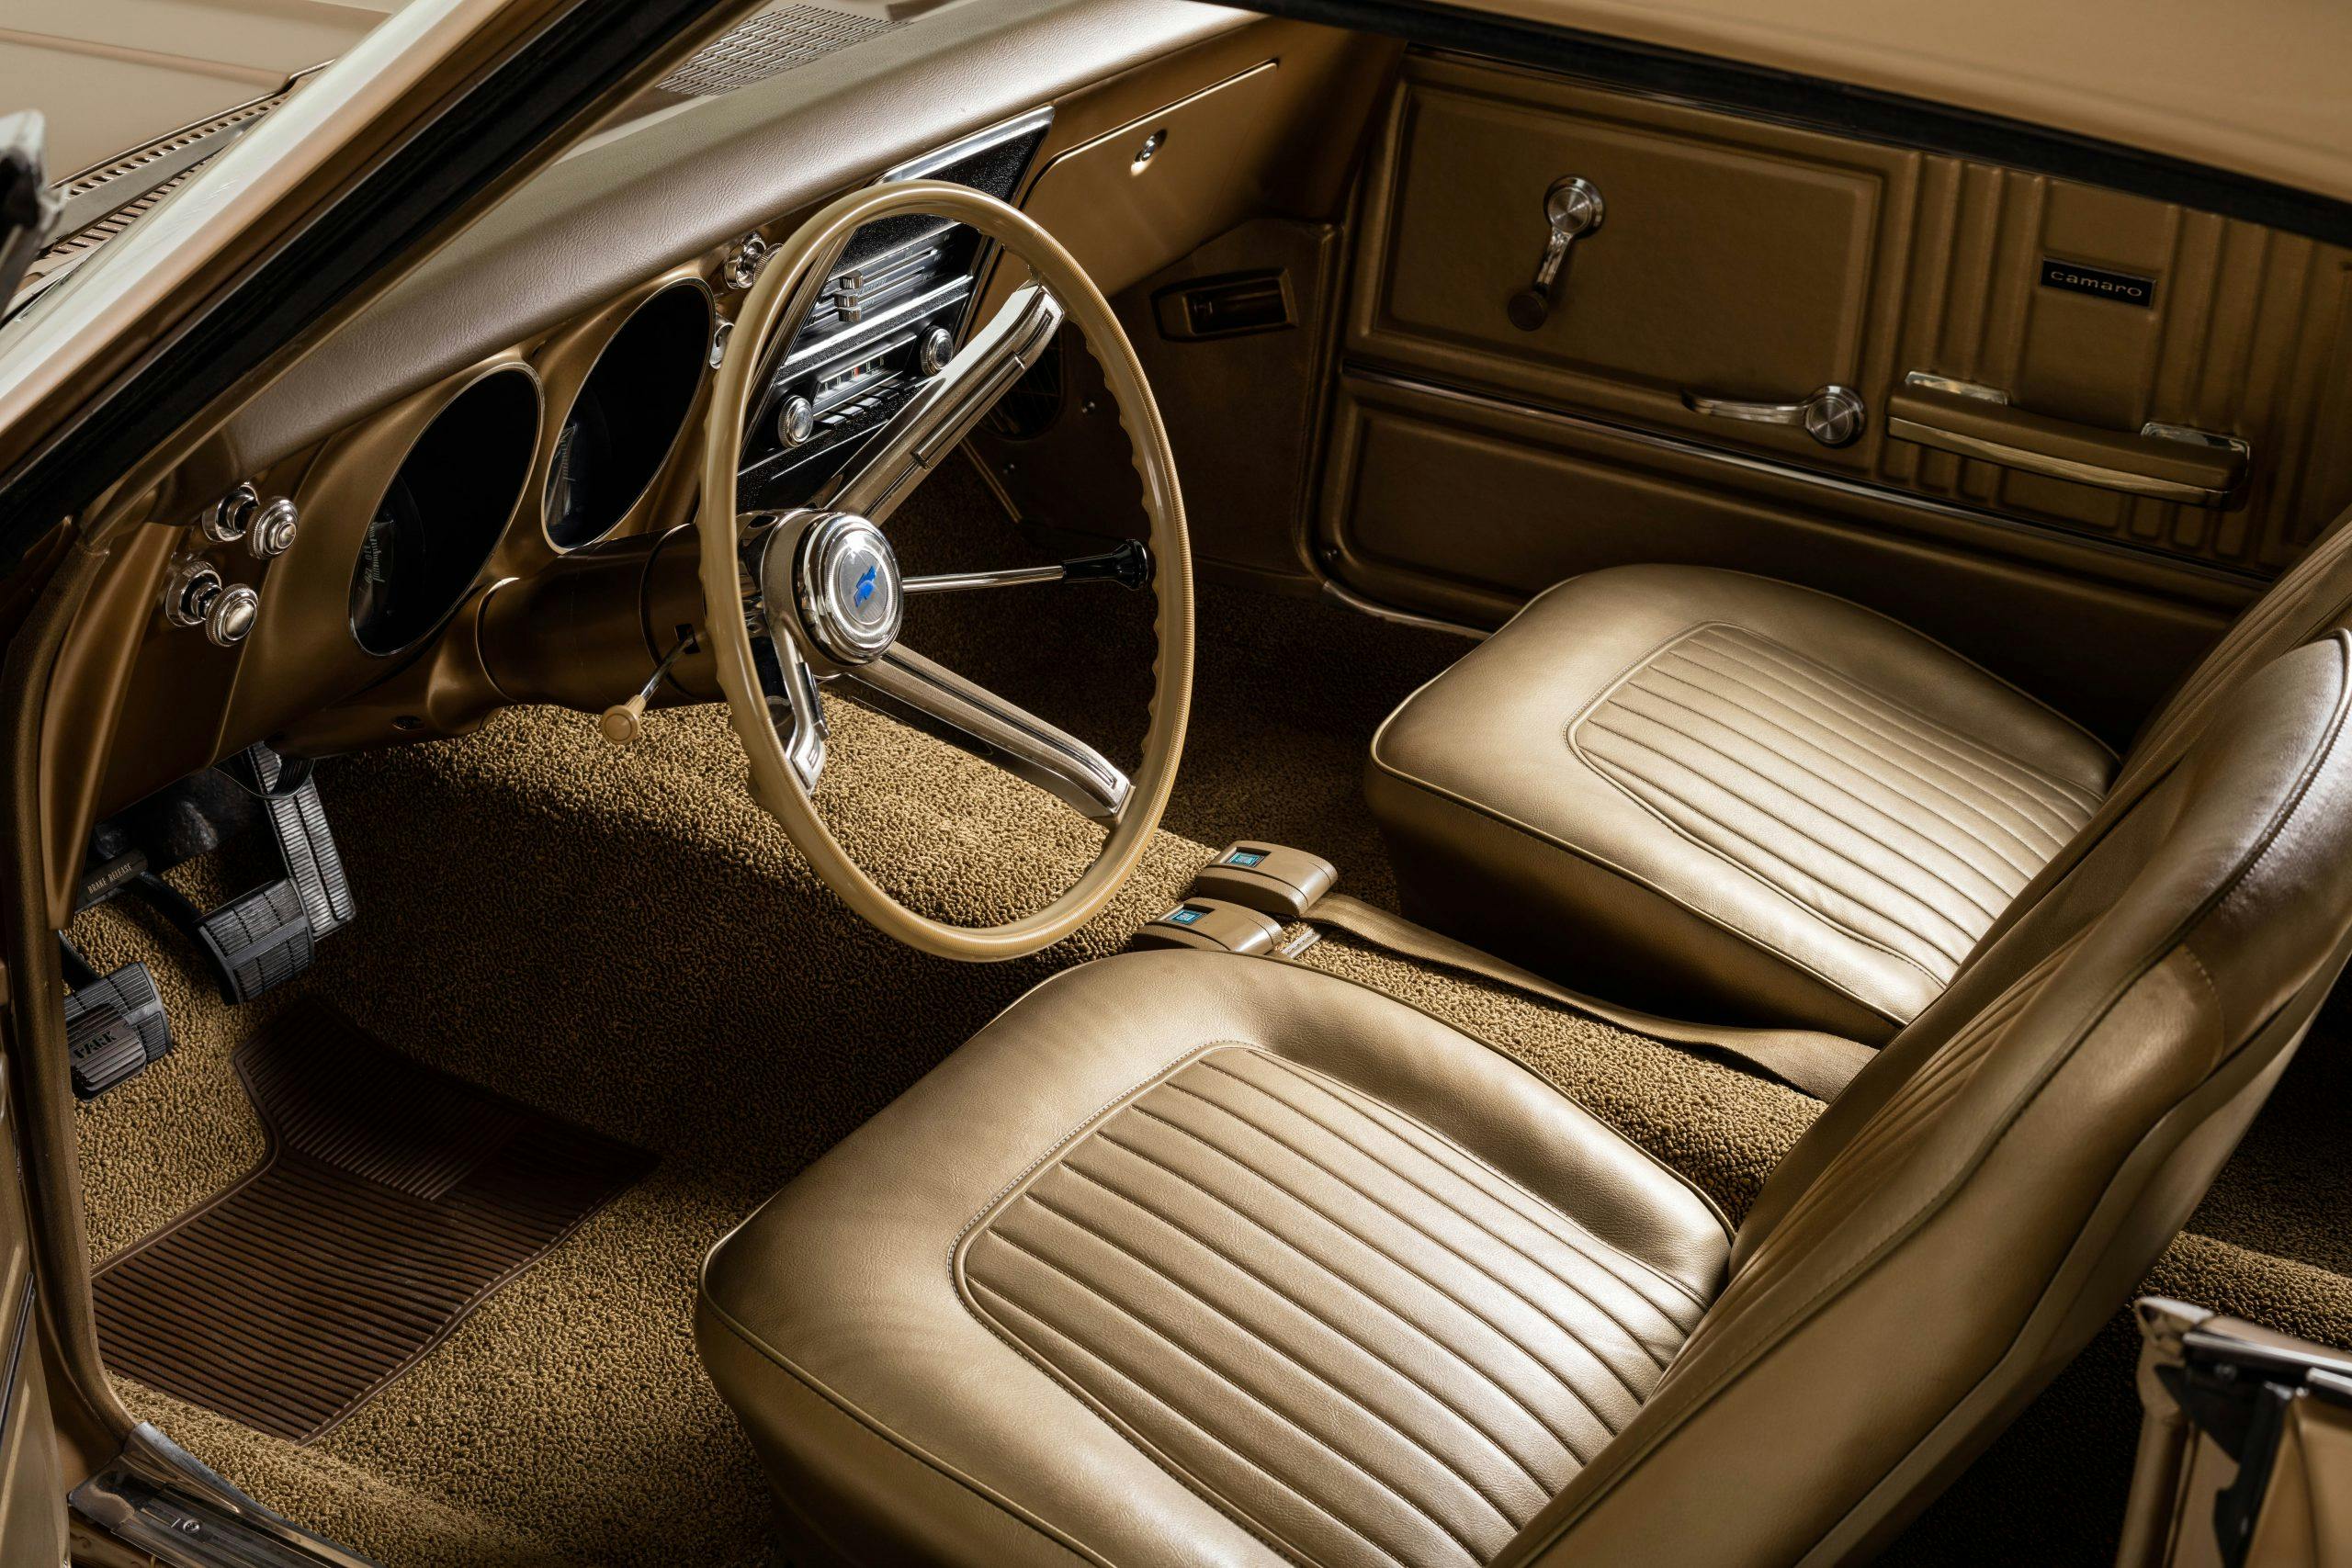 HVA - Chevrolet Camaro N100001 - Interior front bucket seats and steering wheel